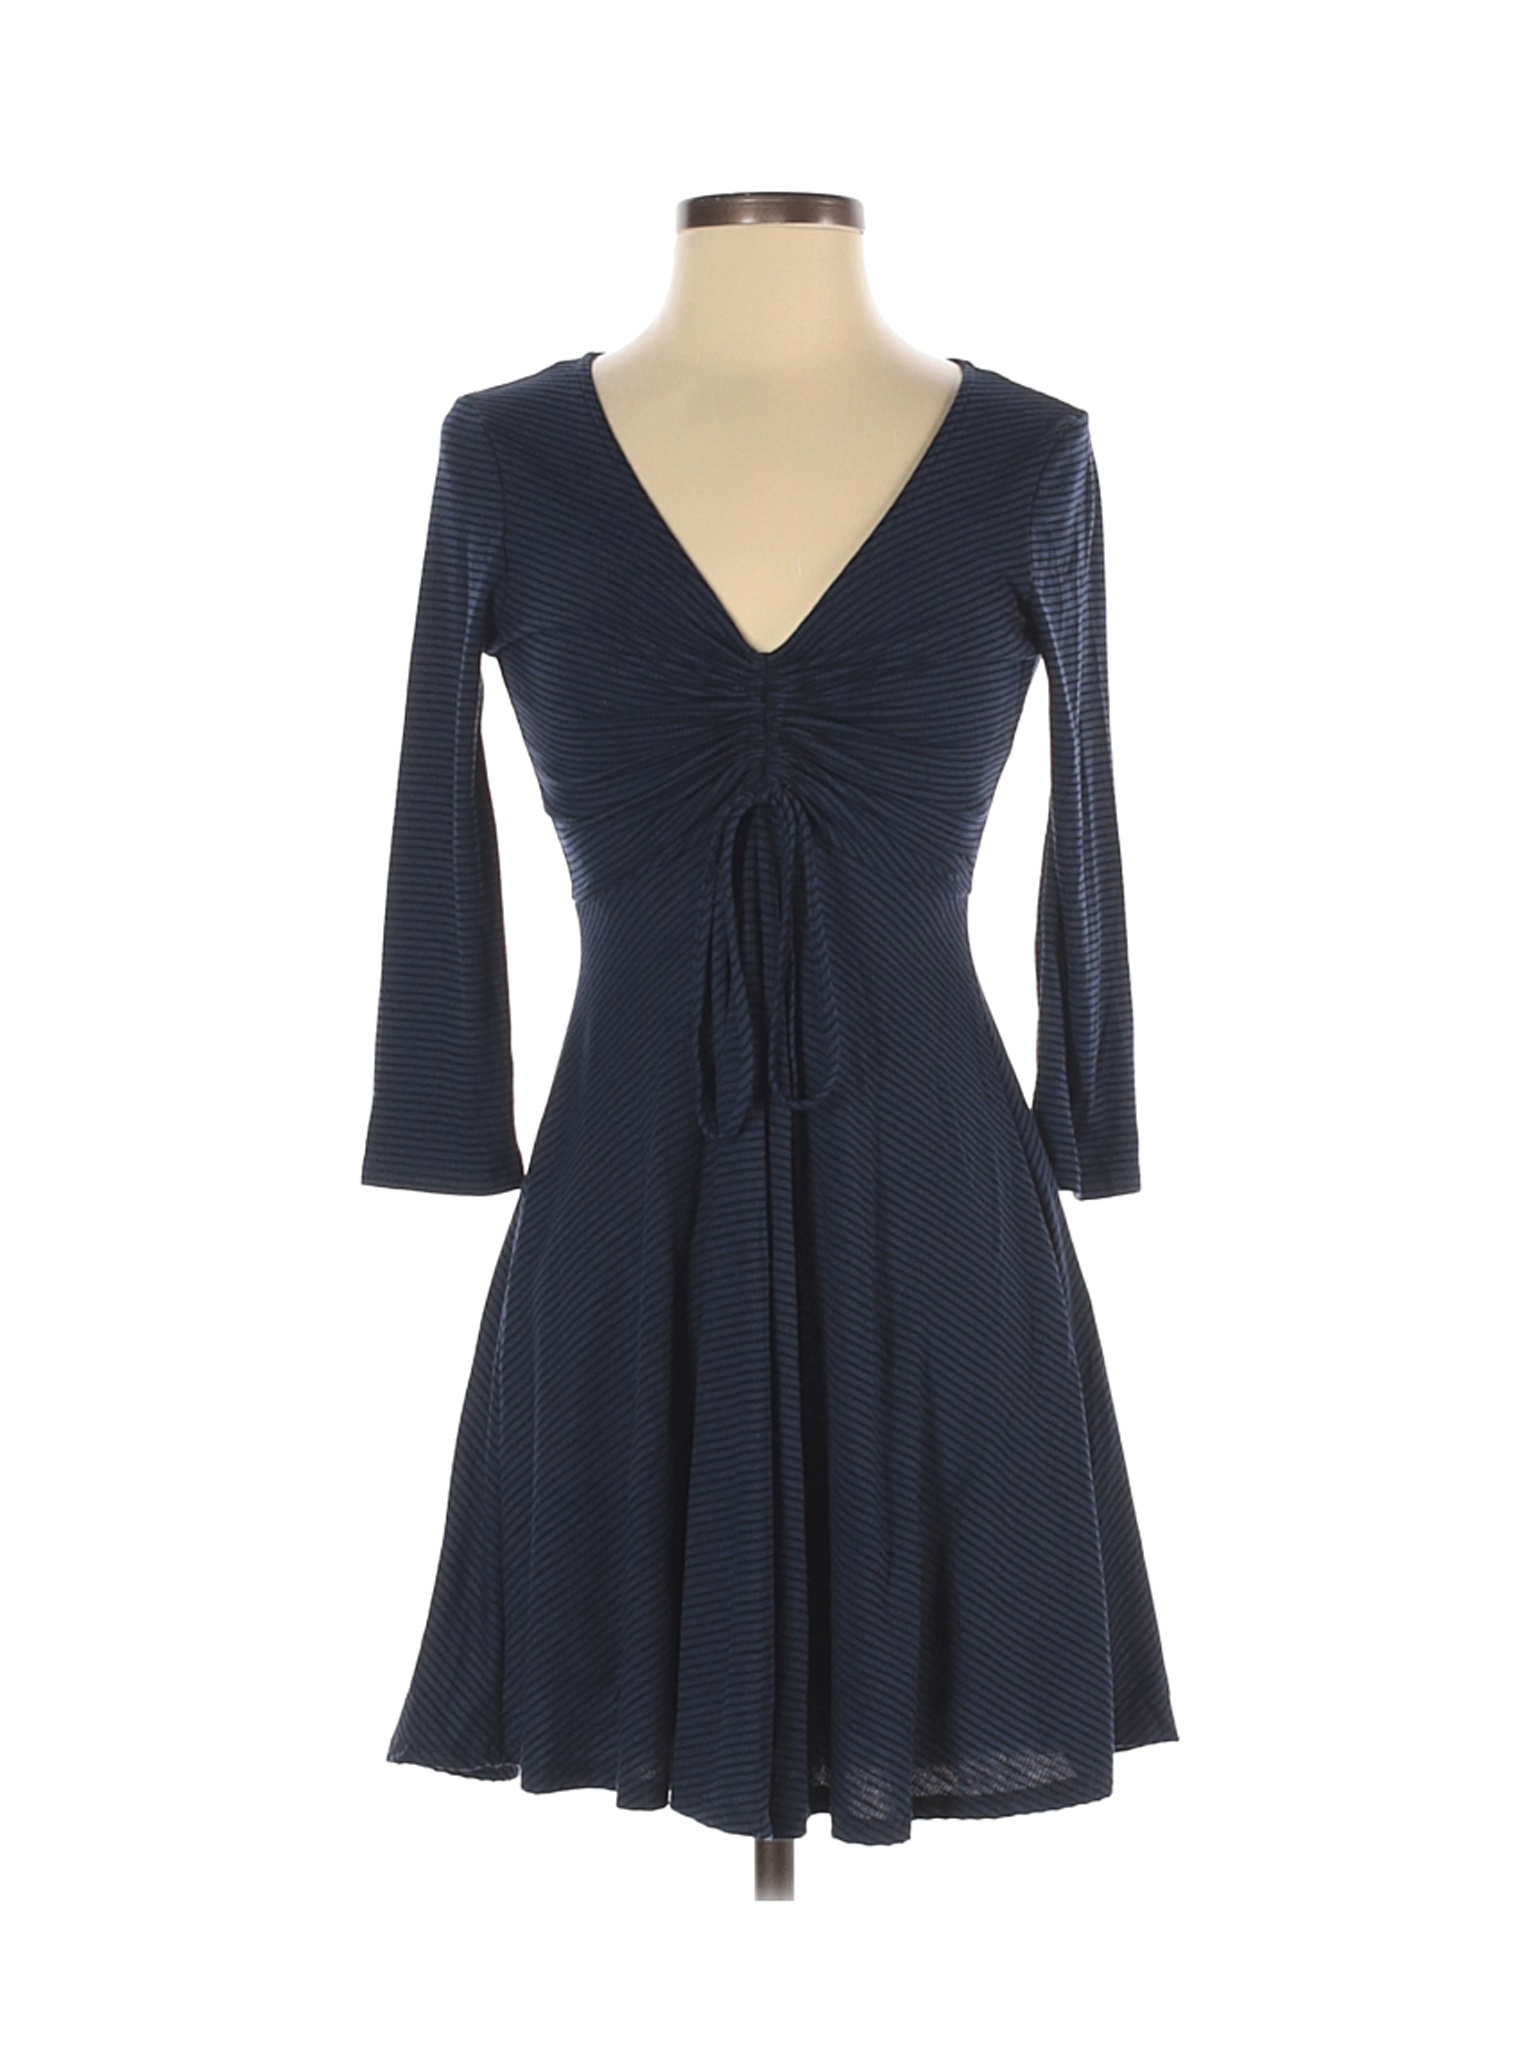 Moa Moa Women Blue Casual Dress S | eBay